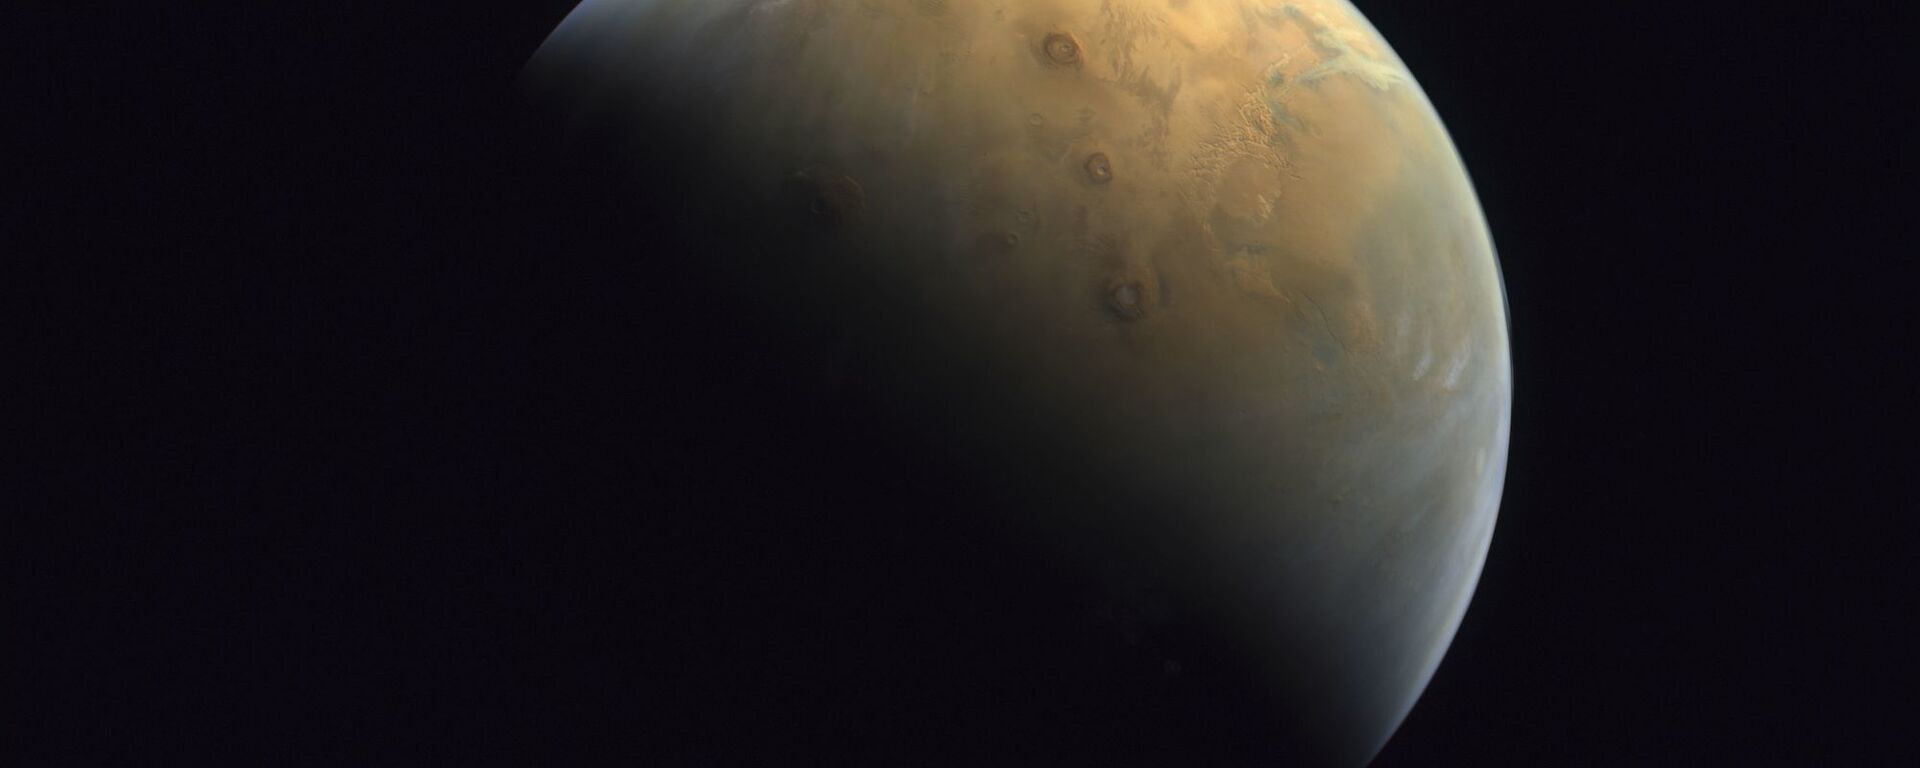 Планета Марс, фото из архива - Sputnik Azərbaycan, 1920, 14.02.2021